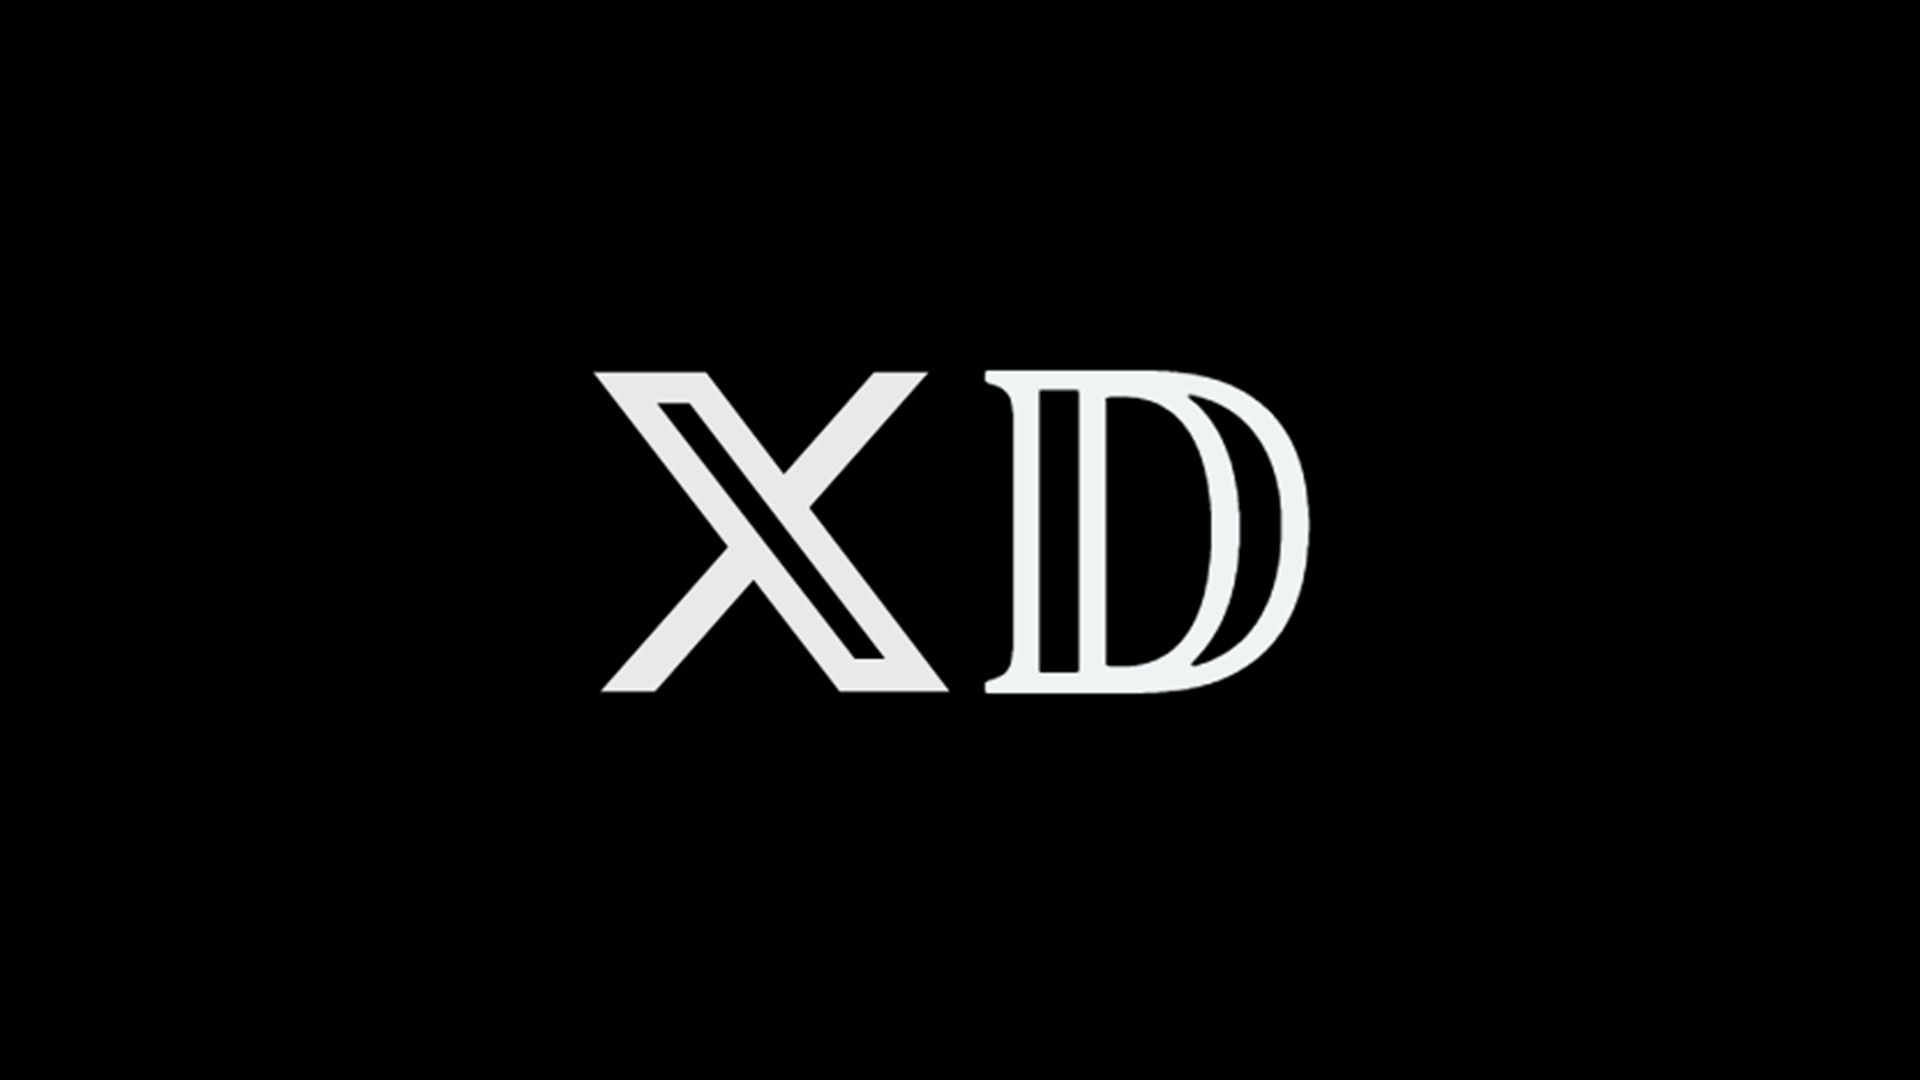 Screenshot of Twitter XD Logo